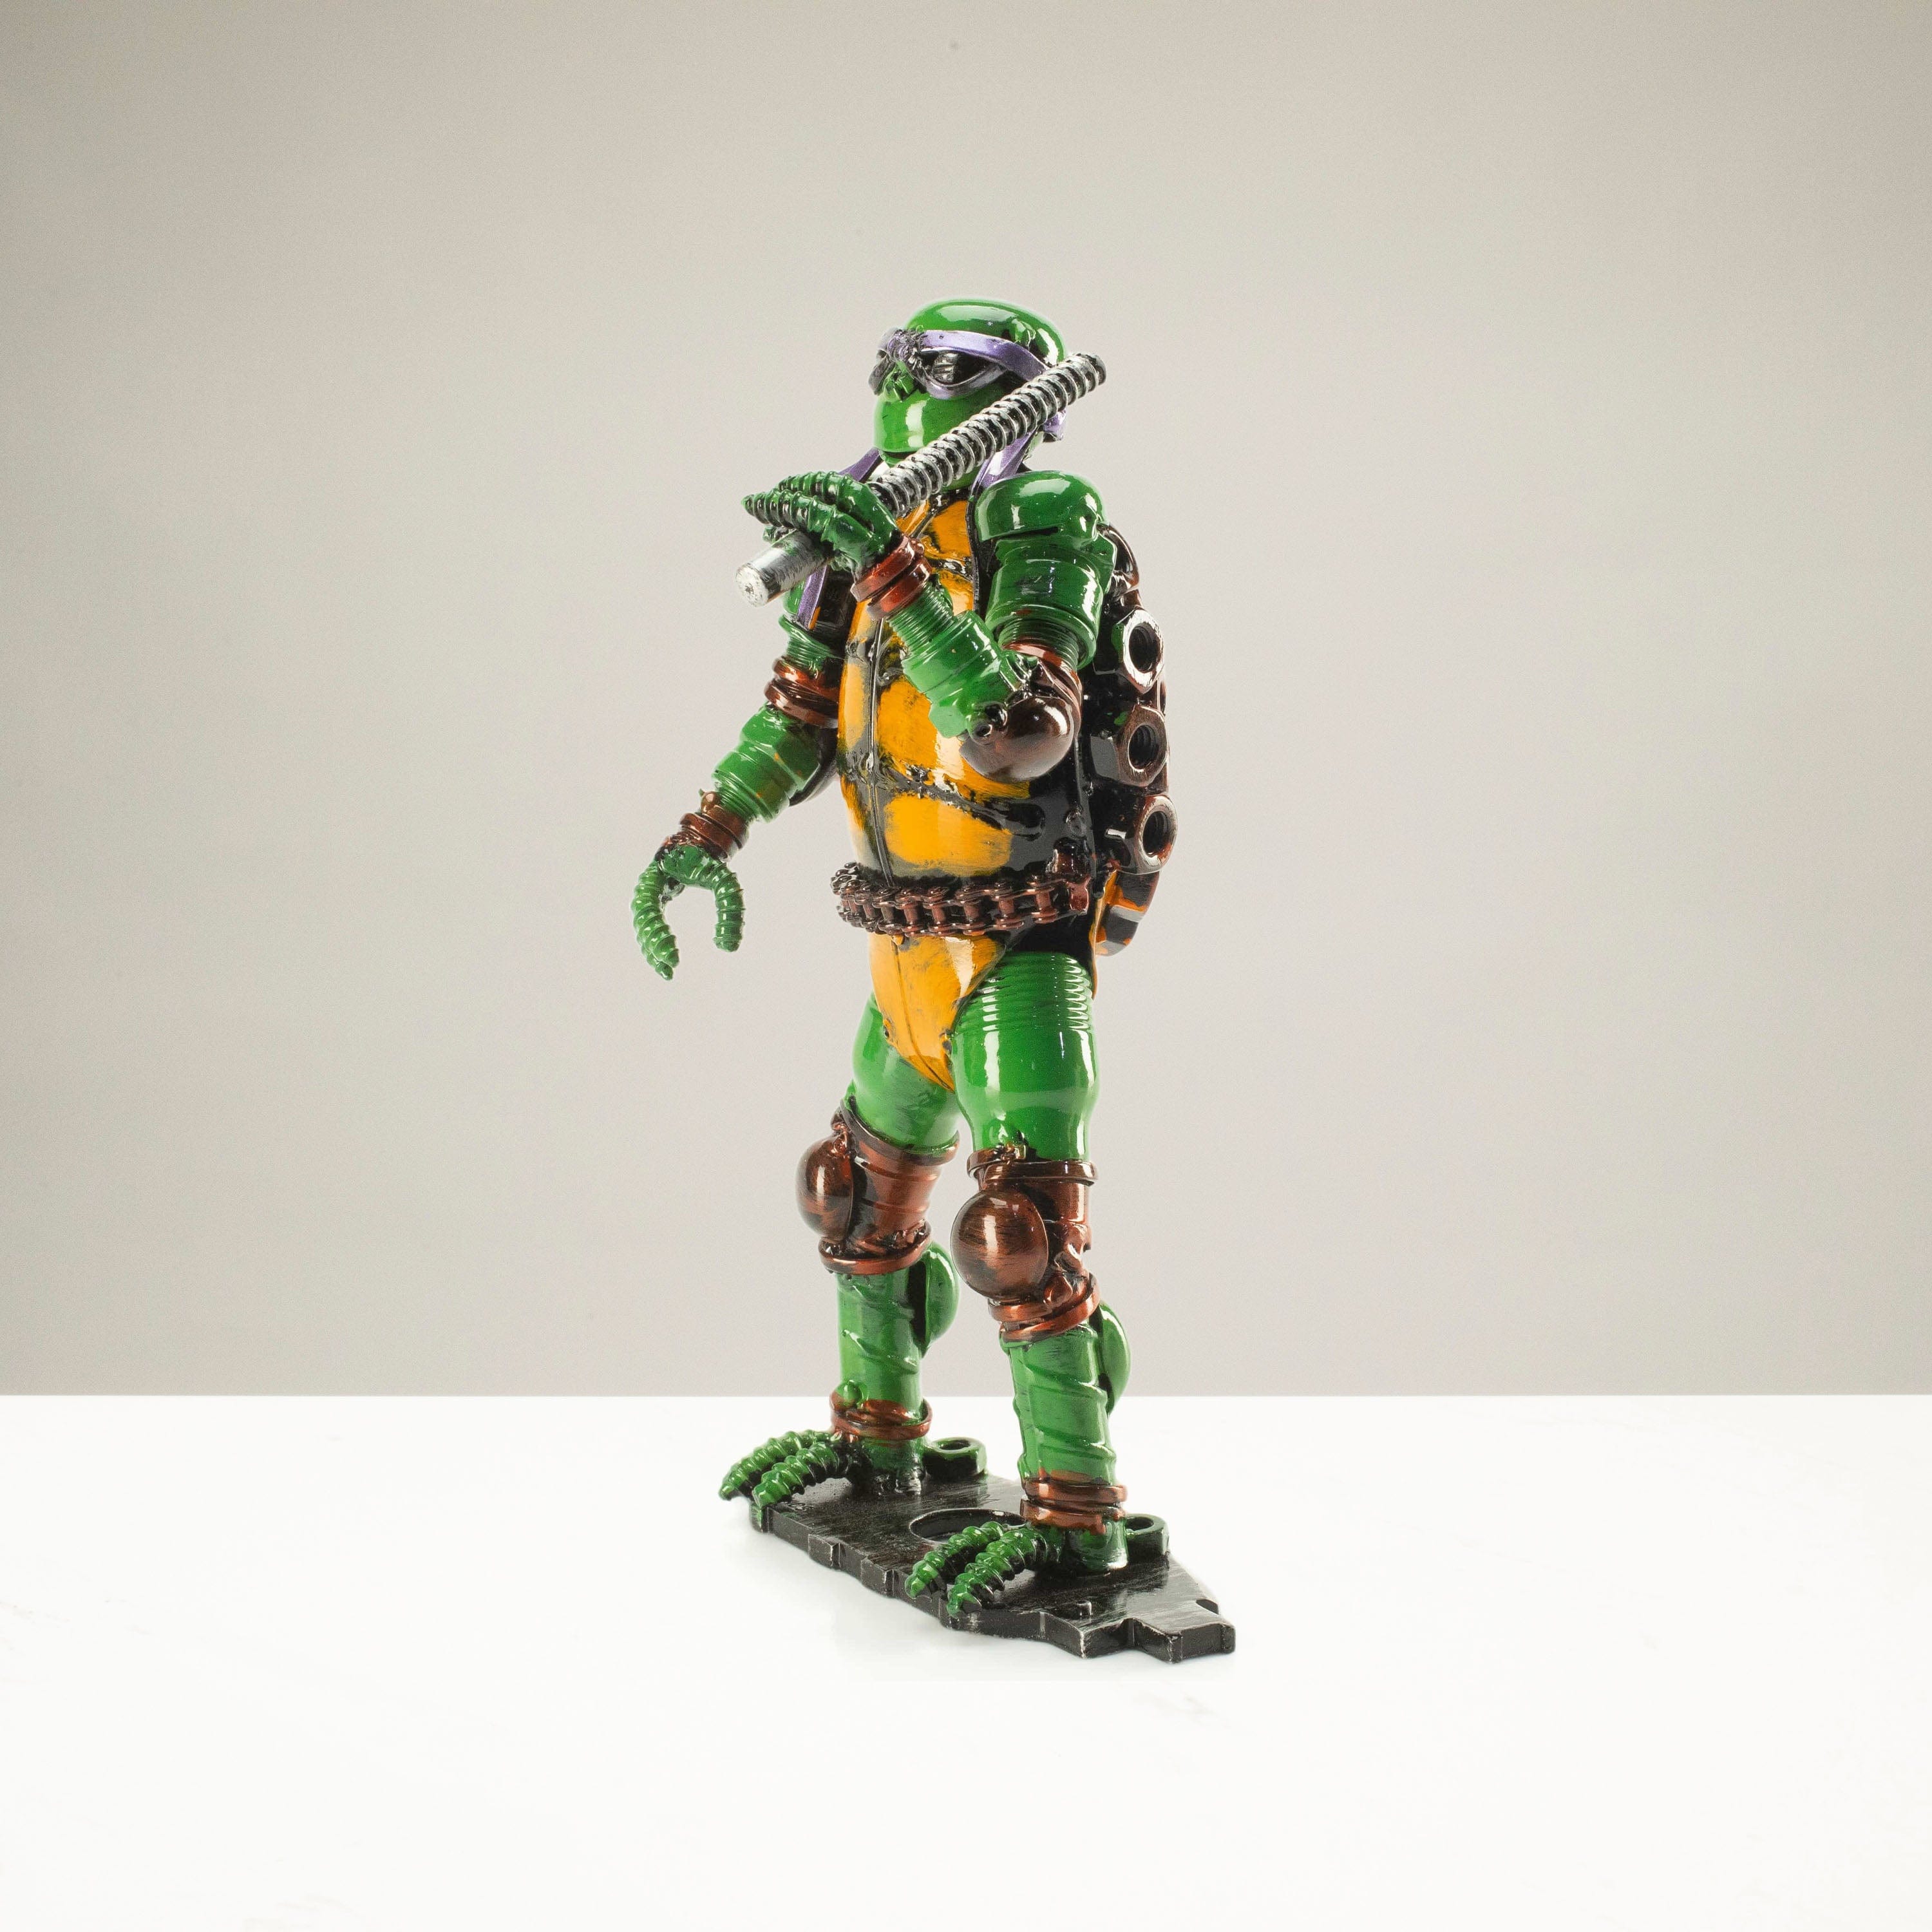 Kalifano Recycled Metal Art 9.5" Donatello Ninja Turtle Inspired Recycled Metal Sculpture RMS-600NTD-N